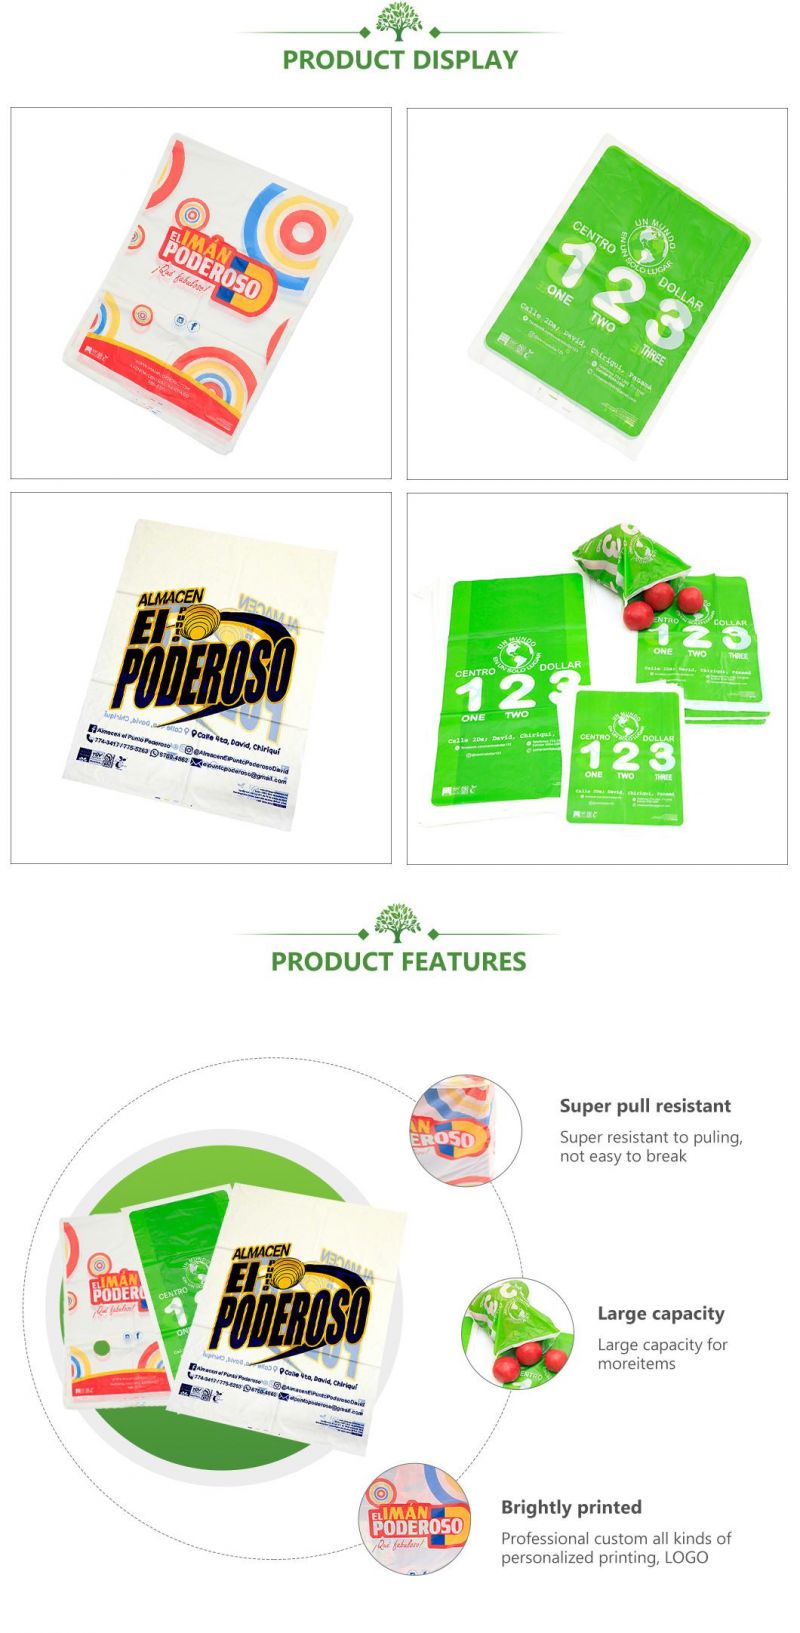 PLA+Pbat/Pbat+Corn Starch Biodegradable Bags, Compostable Bags, Flat Bags for Supermarket